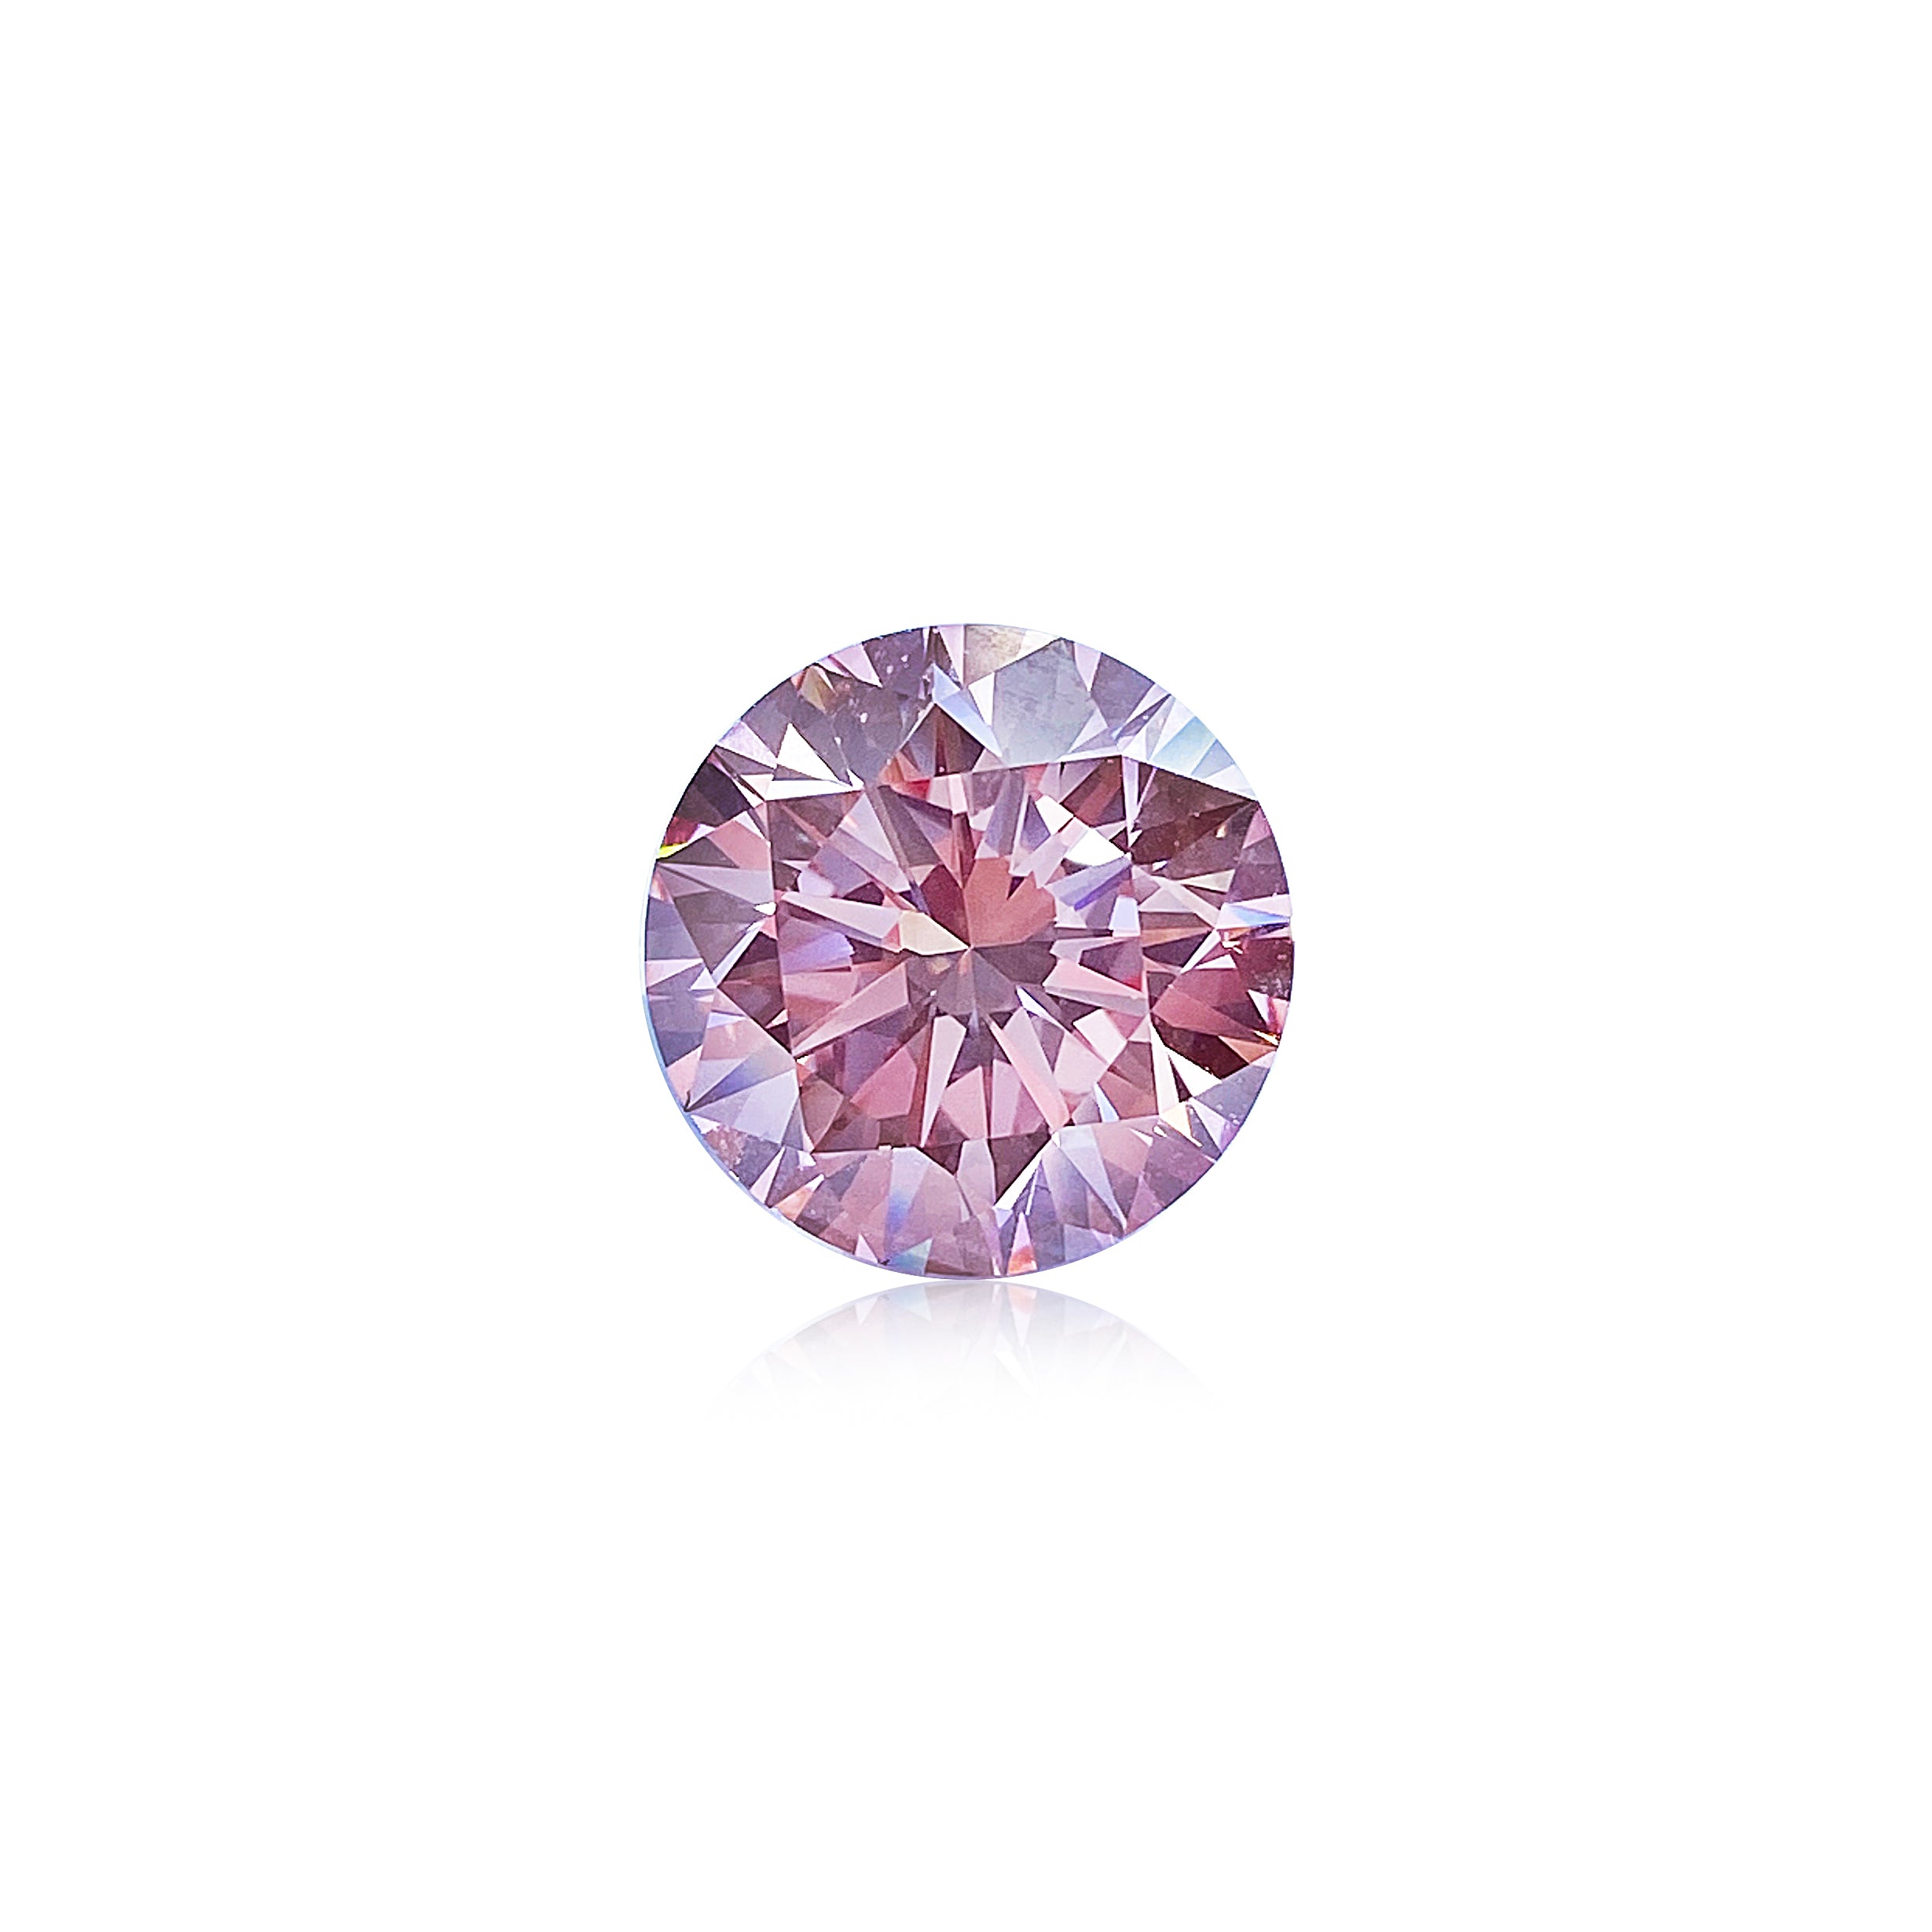 7.13 Carat Fancy Intense Pink Round Brilliant Diamond (GIA)